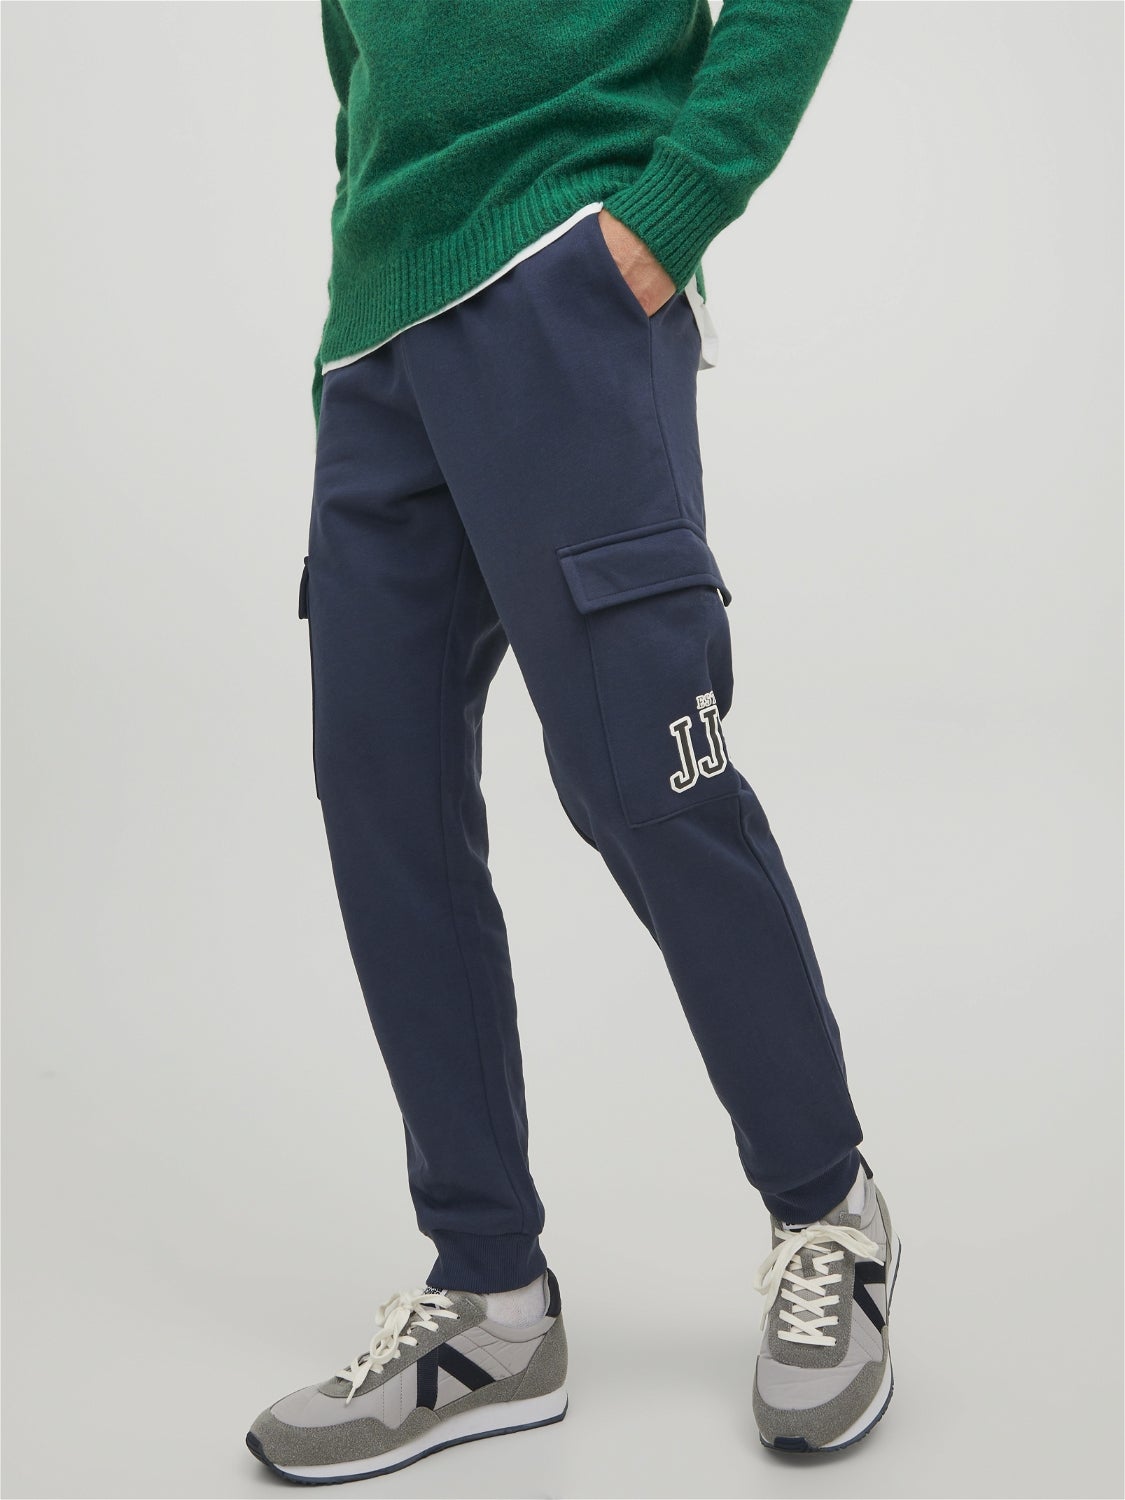 MODA UOMO Pantaloni Gamba larga Jack & Jones Pantaloni di tuta e sportivi Blu navy XL sconto 50% 